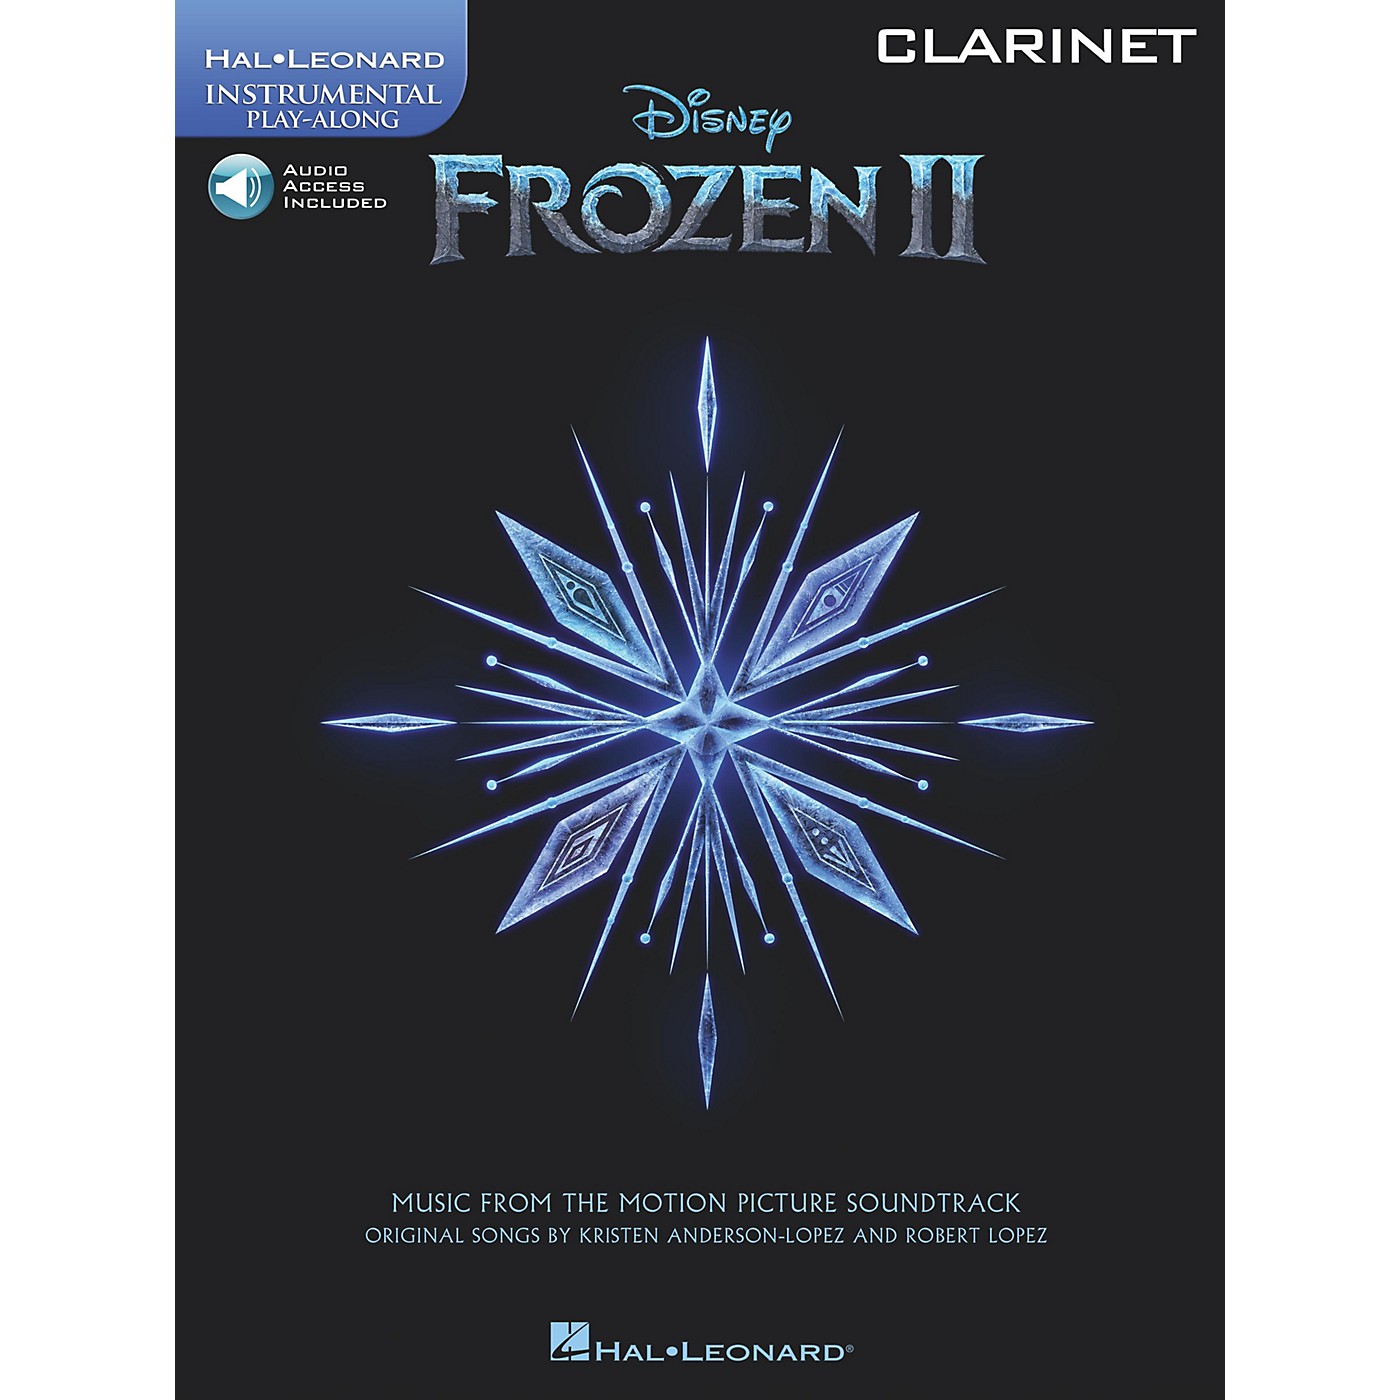 Hal Leonard Frozen II Clarinet Play-Along Instrumental Songbook Book/Audio Online thumbnail